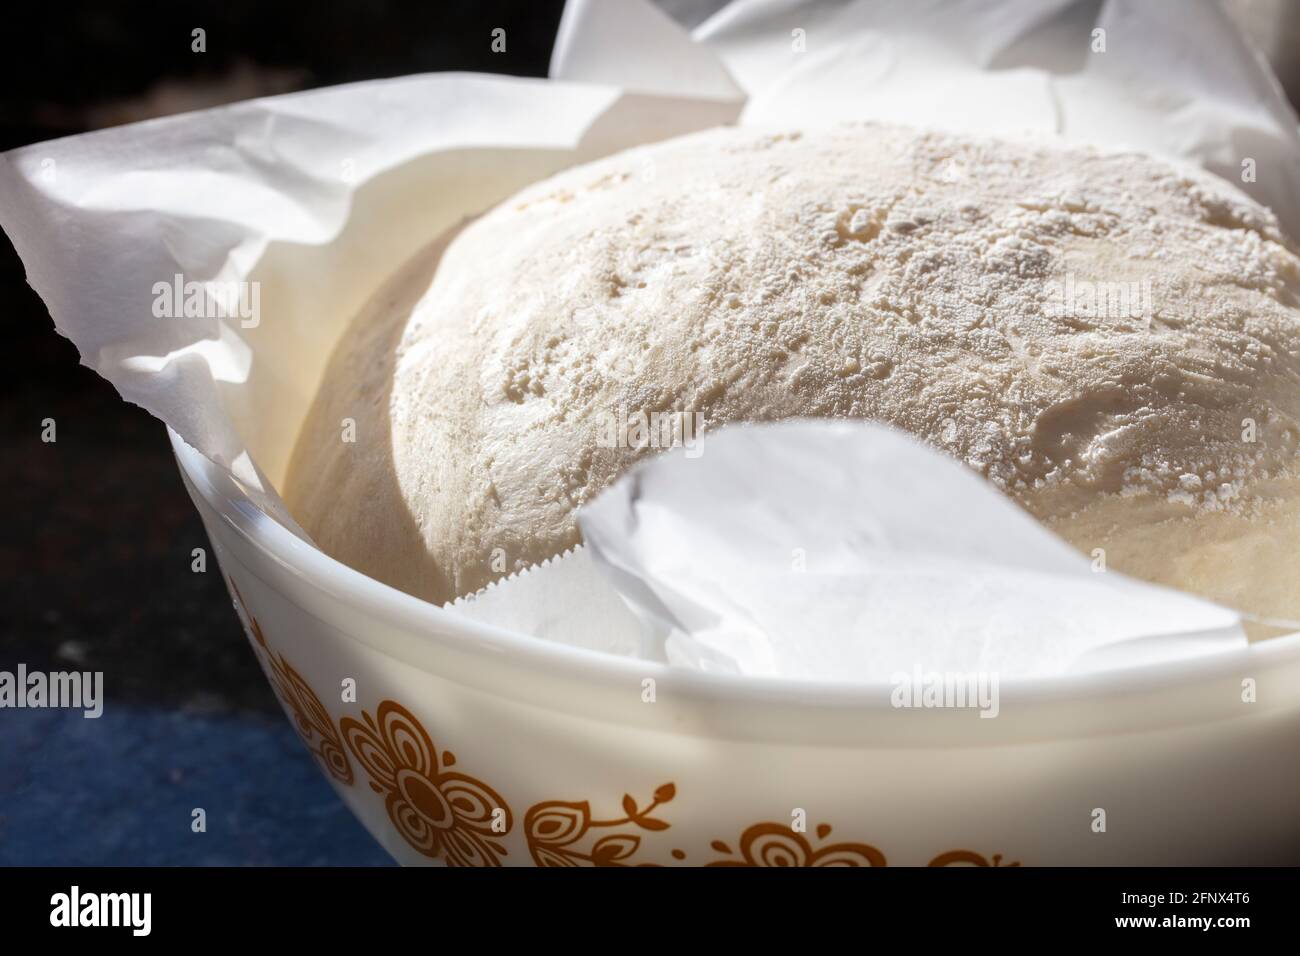 https://c8.alamy.com/comp/2FNX4T6/sourdough-dough-fermenting-in-a-bowl-to-make-a-loaf-of-bread-2FNX4T6.jpg